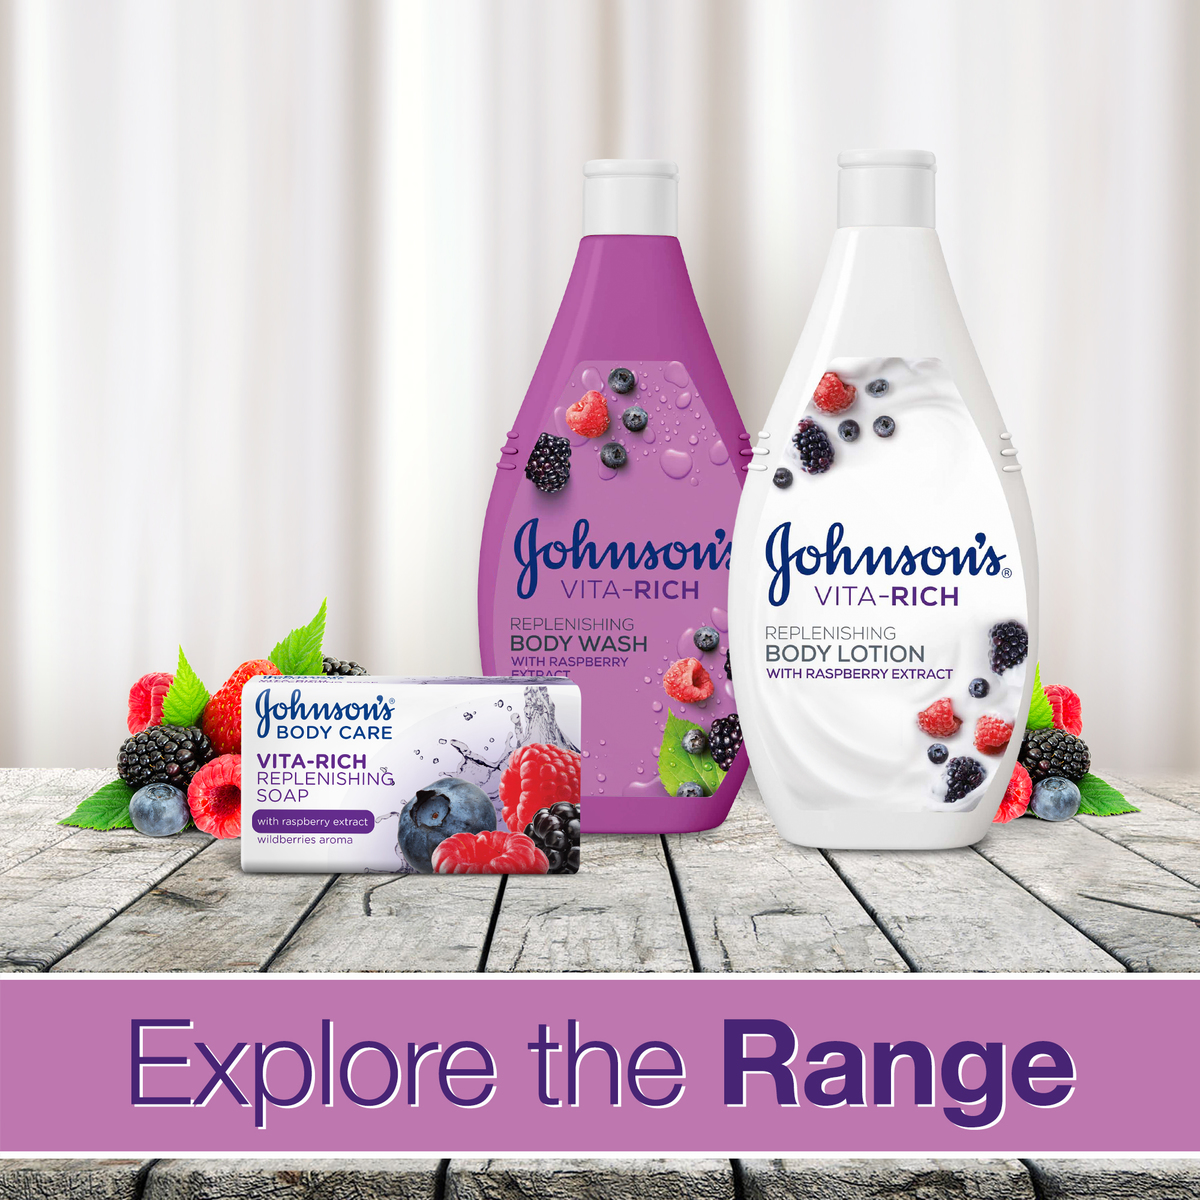 Johnson's Body Wash Vita-Rich Replenishing 400 ml